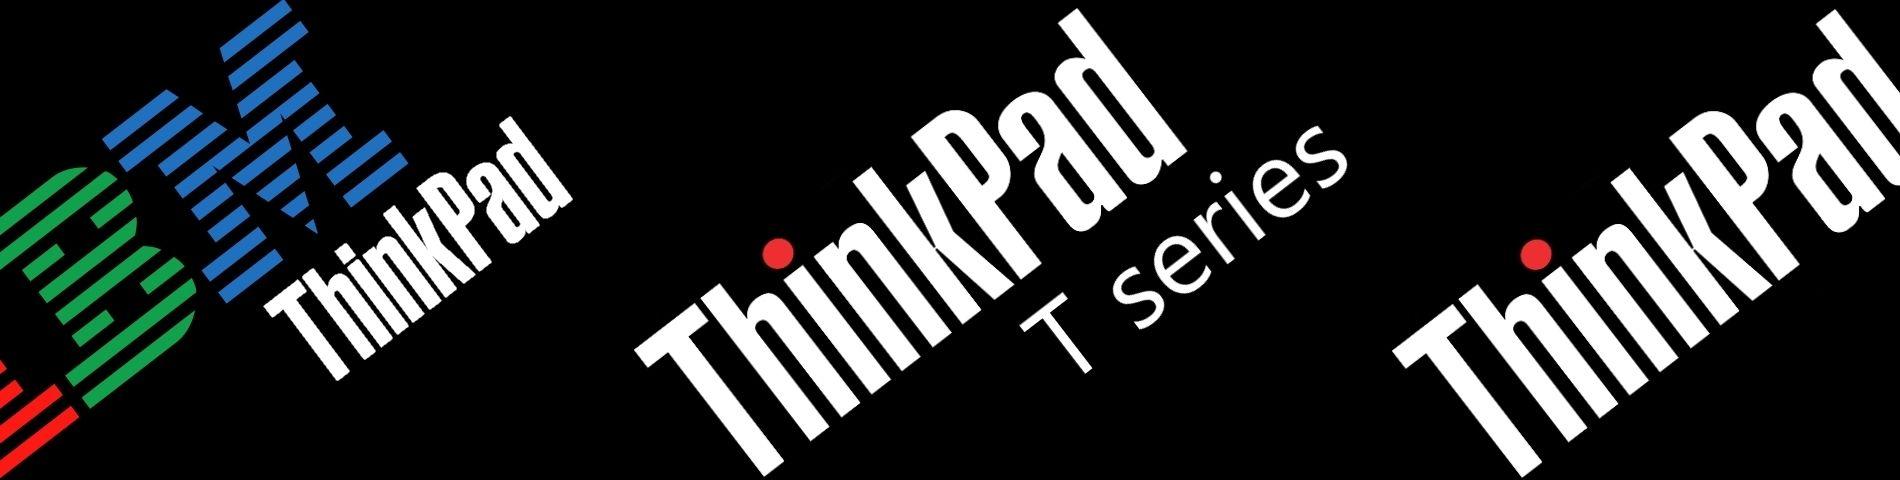 IBM ThinkPad Logo - 25th ThinkPad Anniversary, Part 2: The Crises of the 2000s and the ...